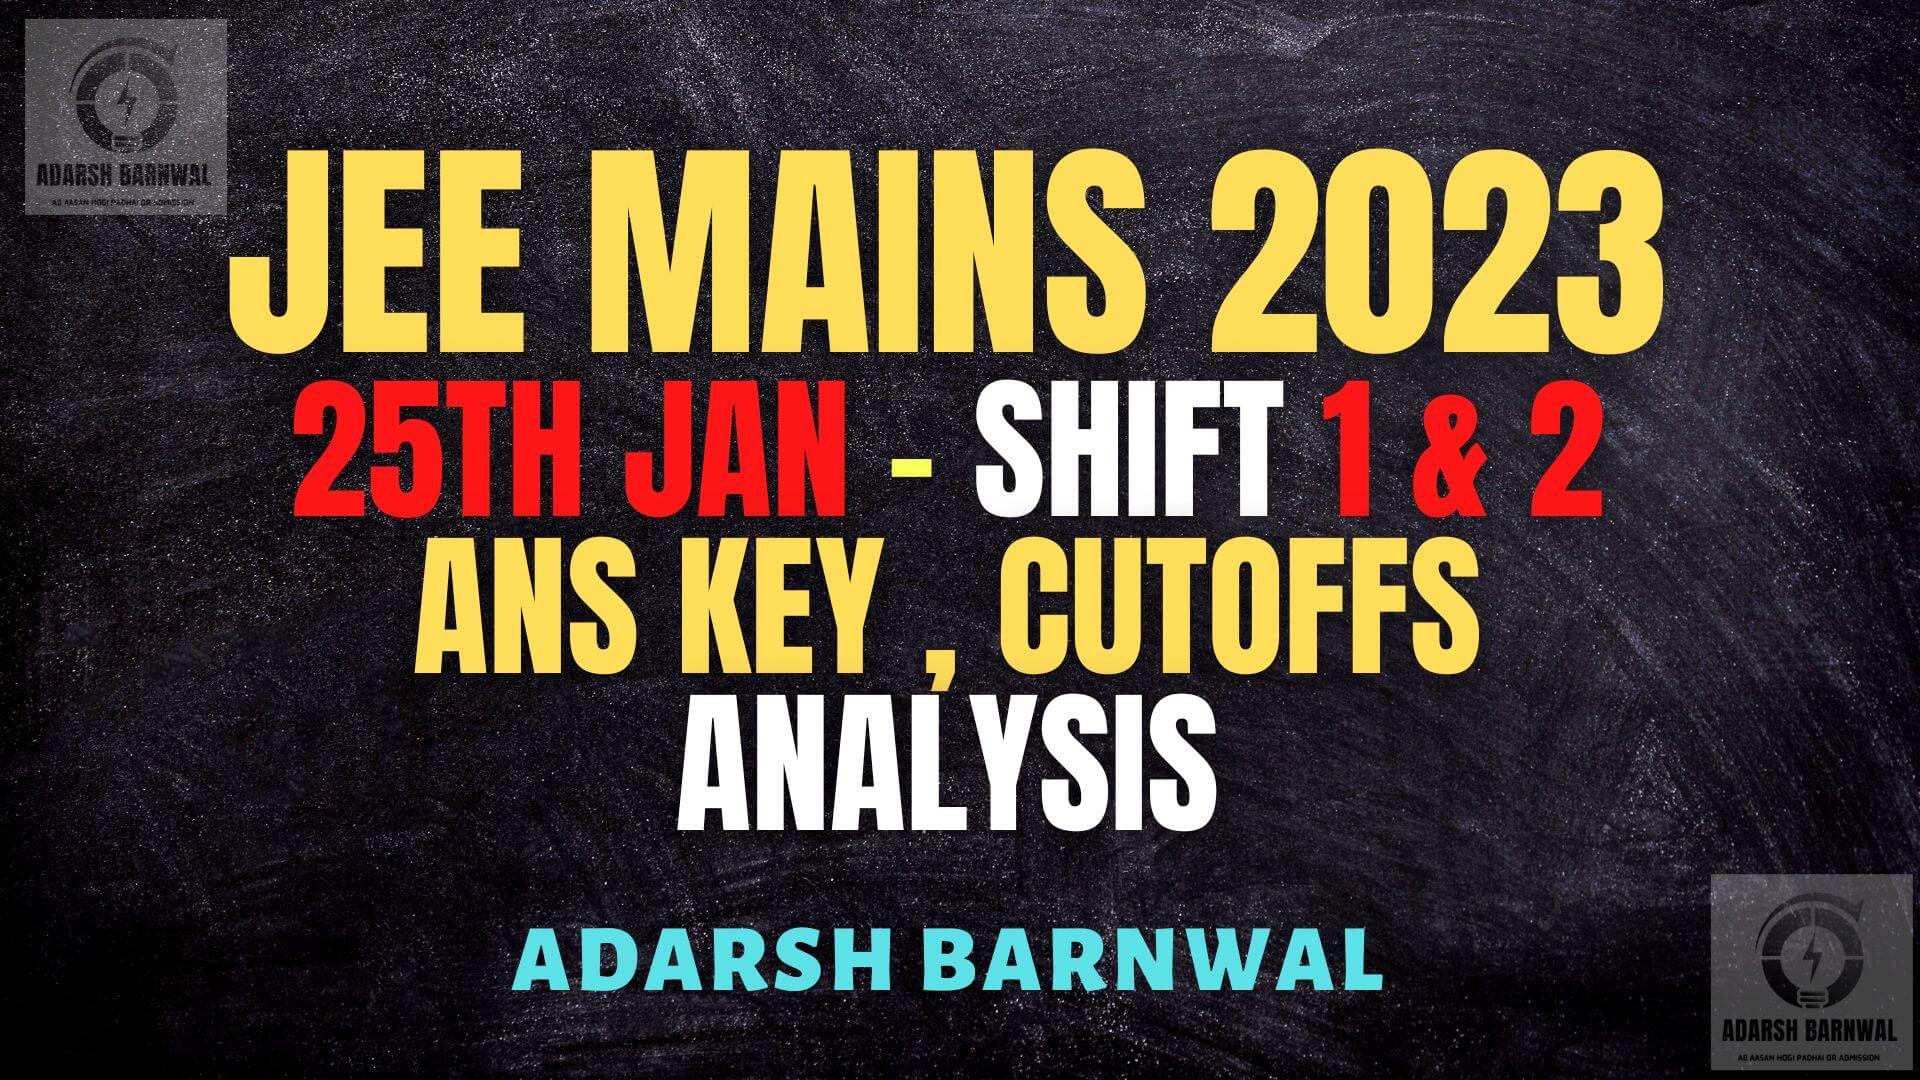 Jee Mains 2023 January 25 shift 1 & Shift 2 analysis ,Answer key , Expected cutoffs by adarsh barnwal